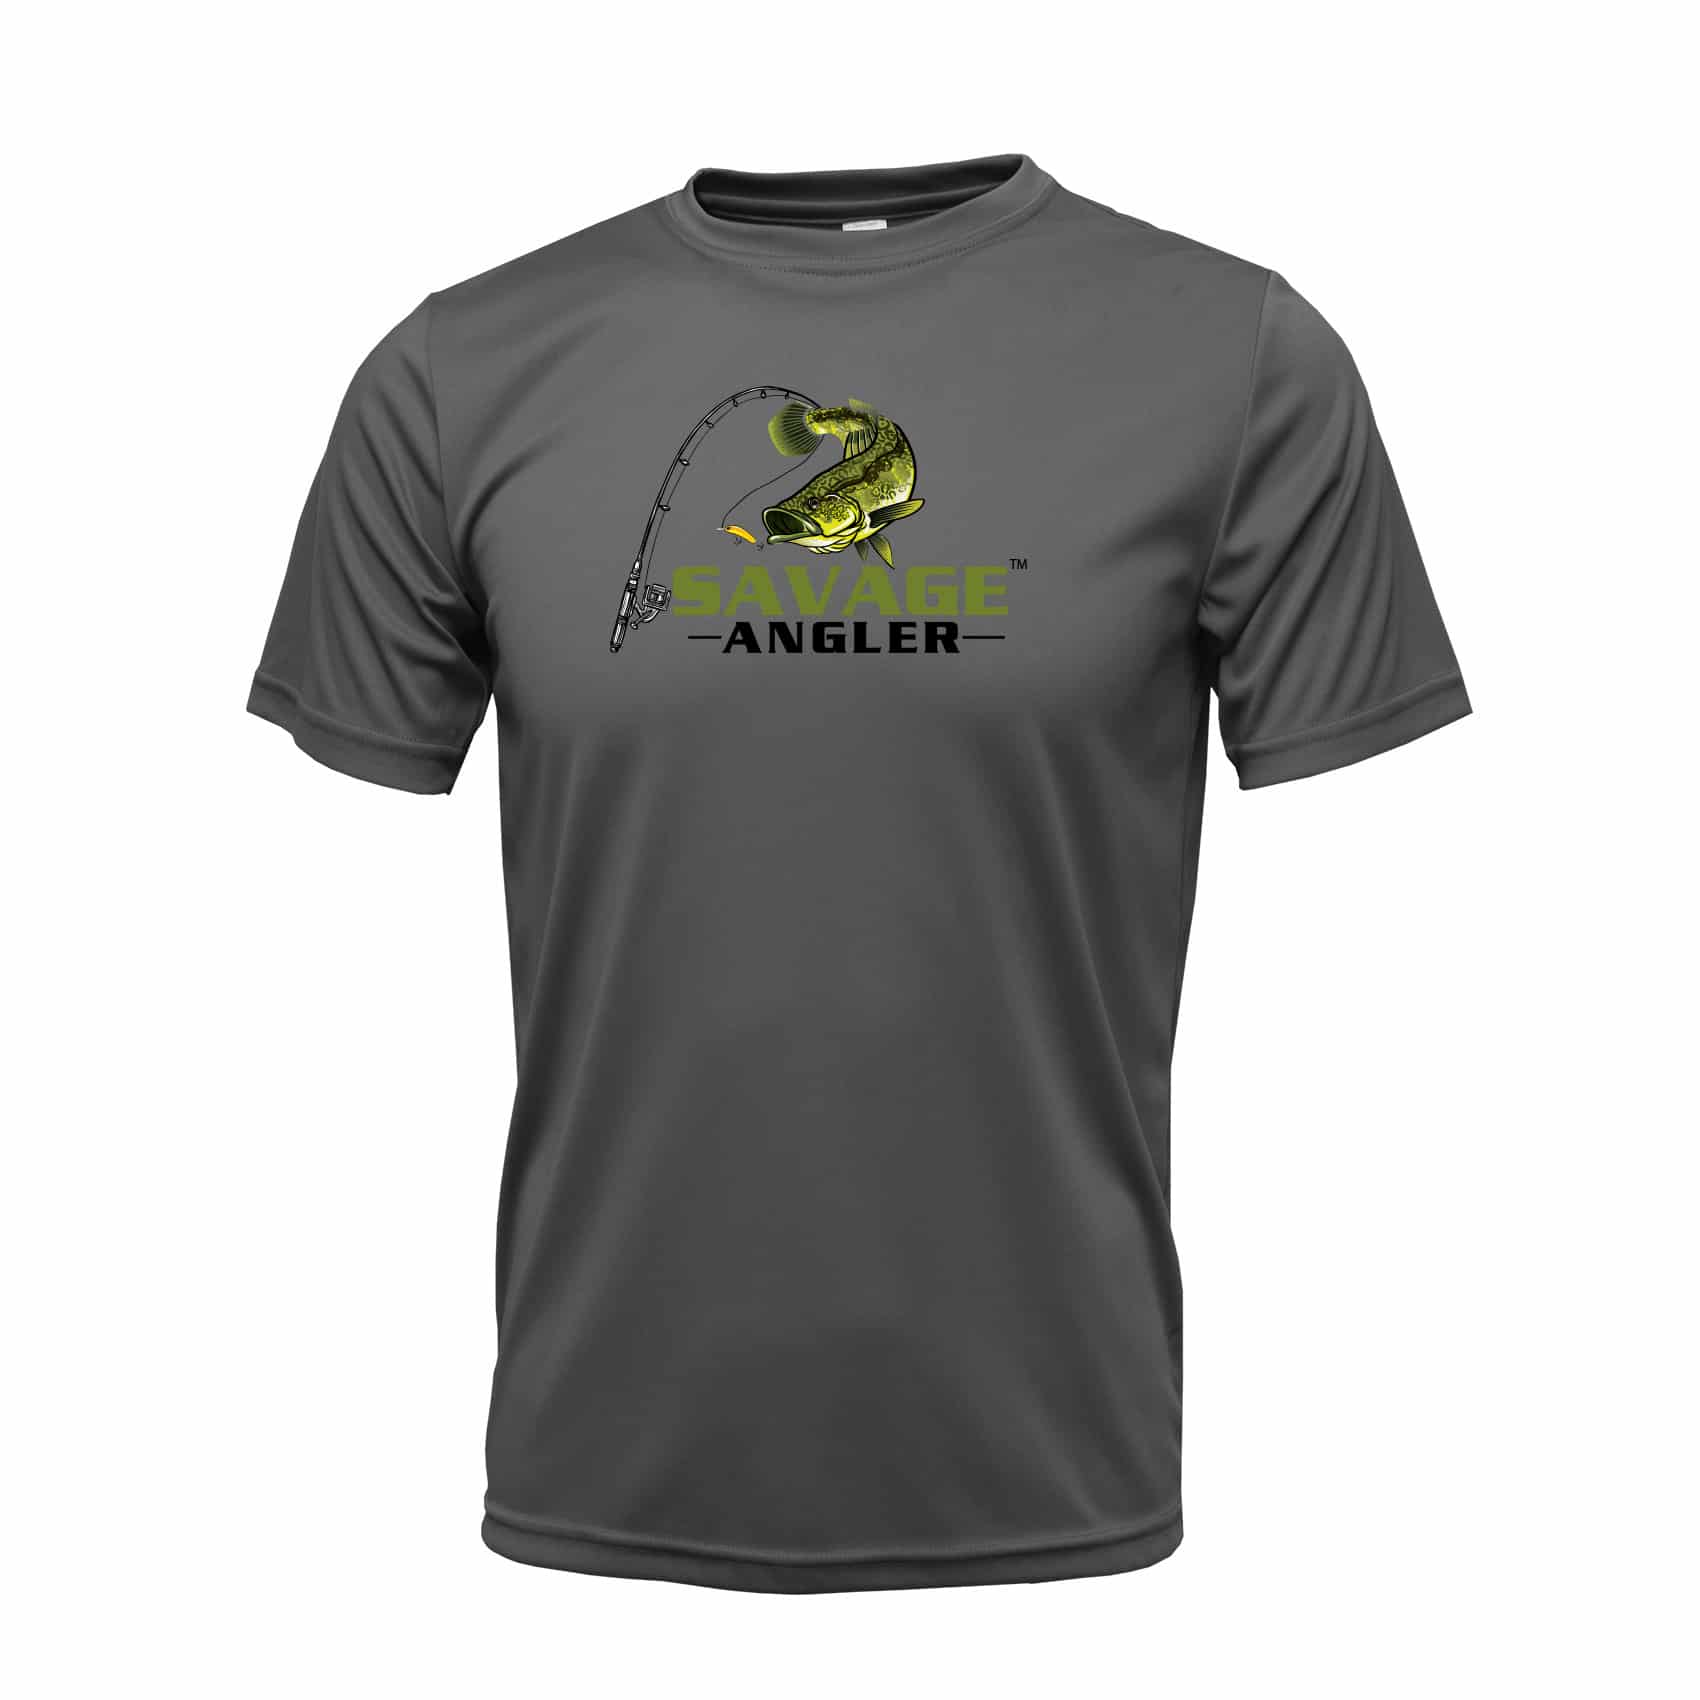 Savage Angler Bass Series Men's Long Sleeve Performance Fishing Shirt -  Neon Green